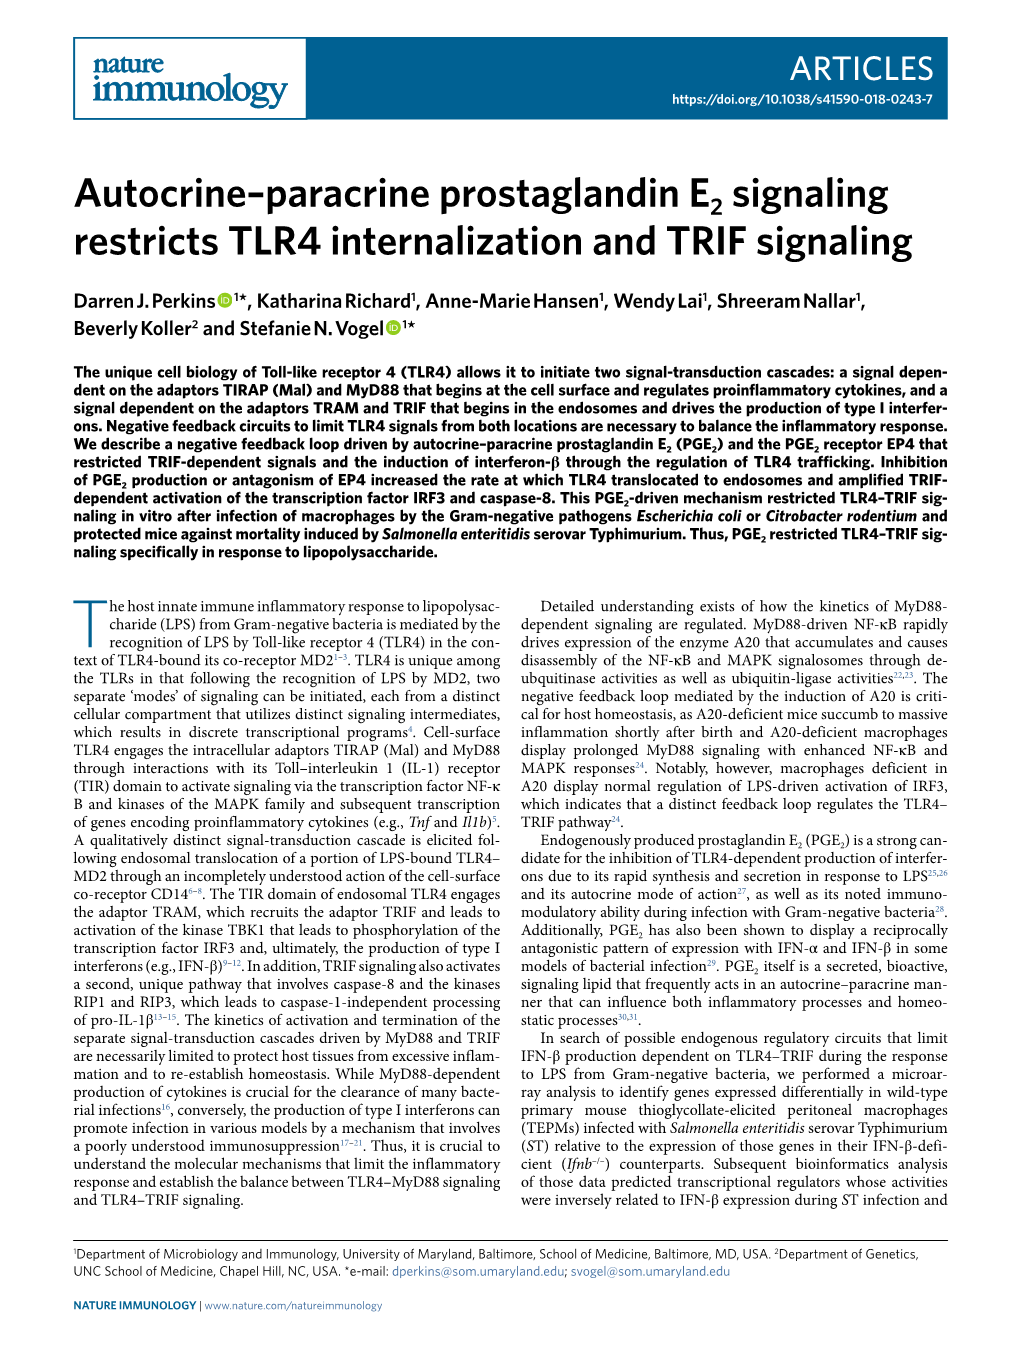 Autocrine–Paracrine Prostaglandin E2 Signaling Restricts TLR4 Internalization and TRIF Signaling